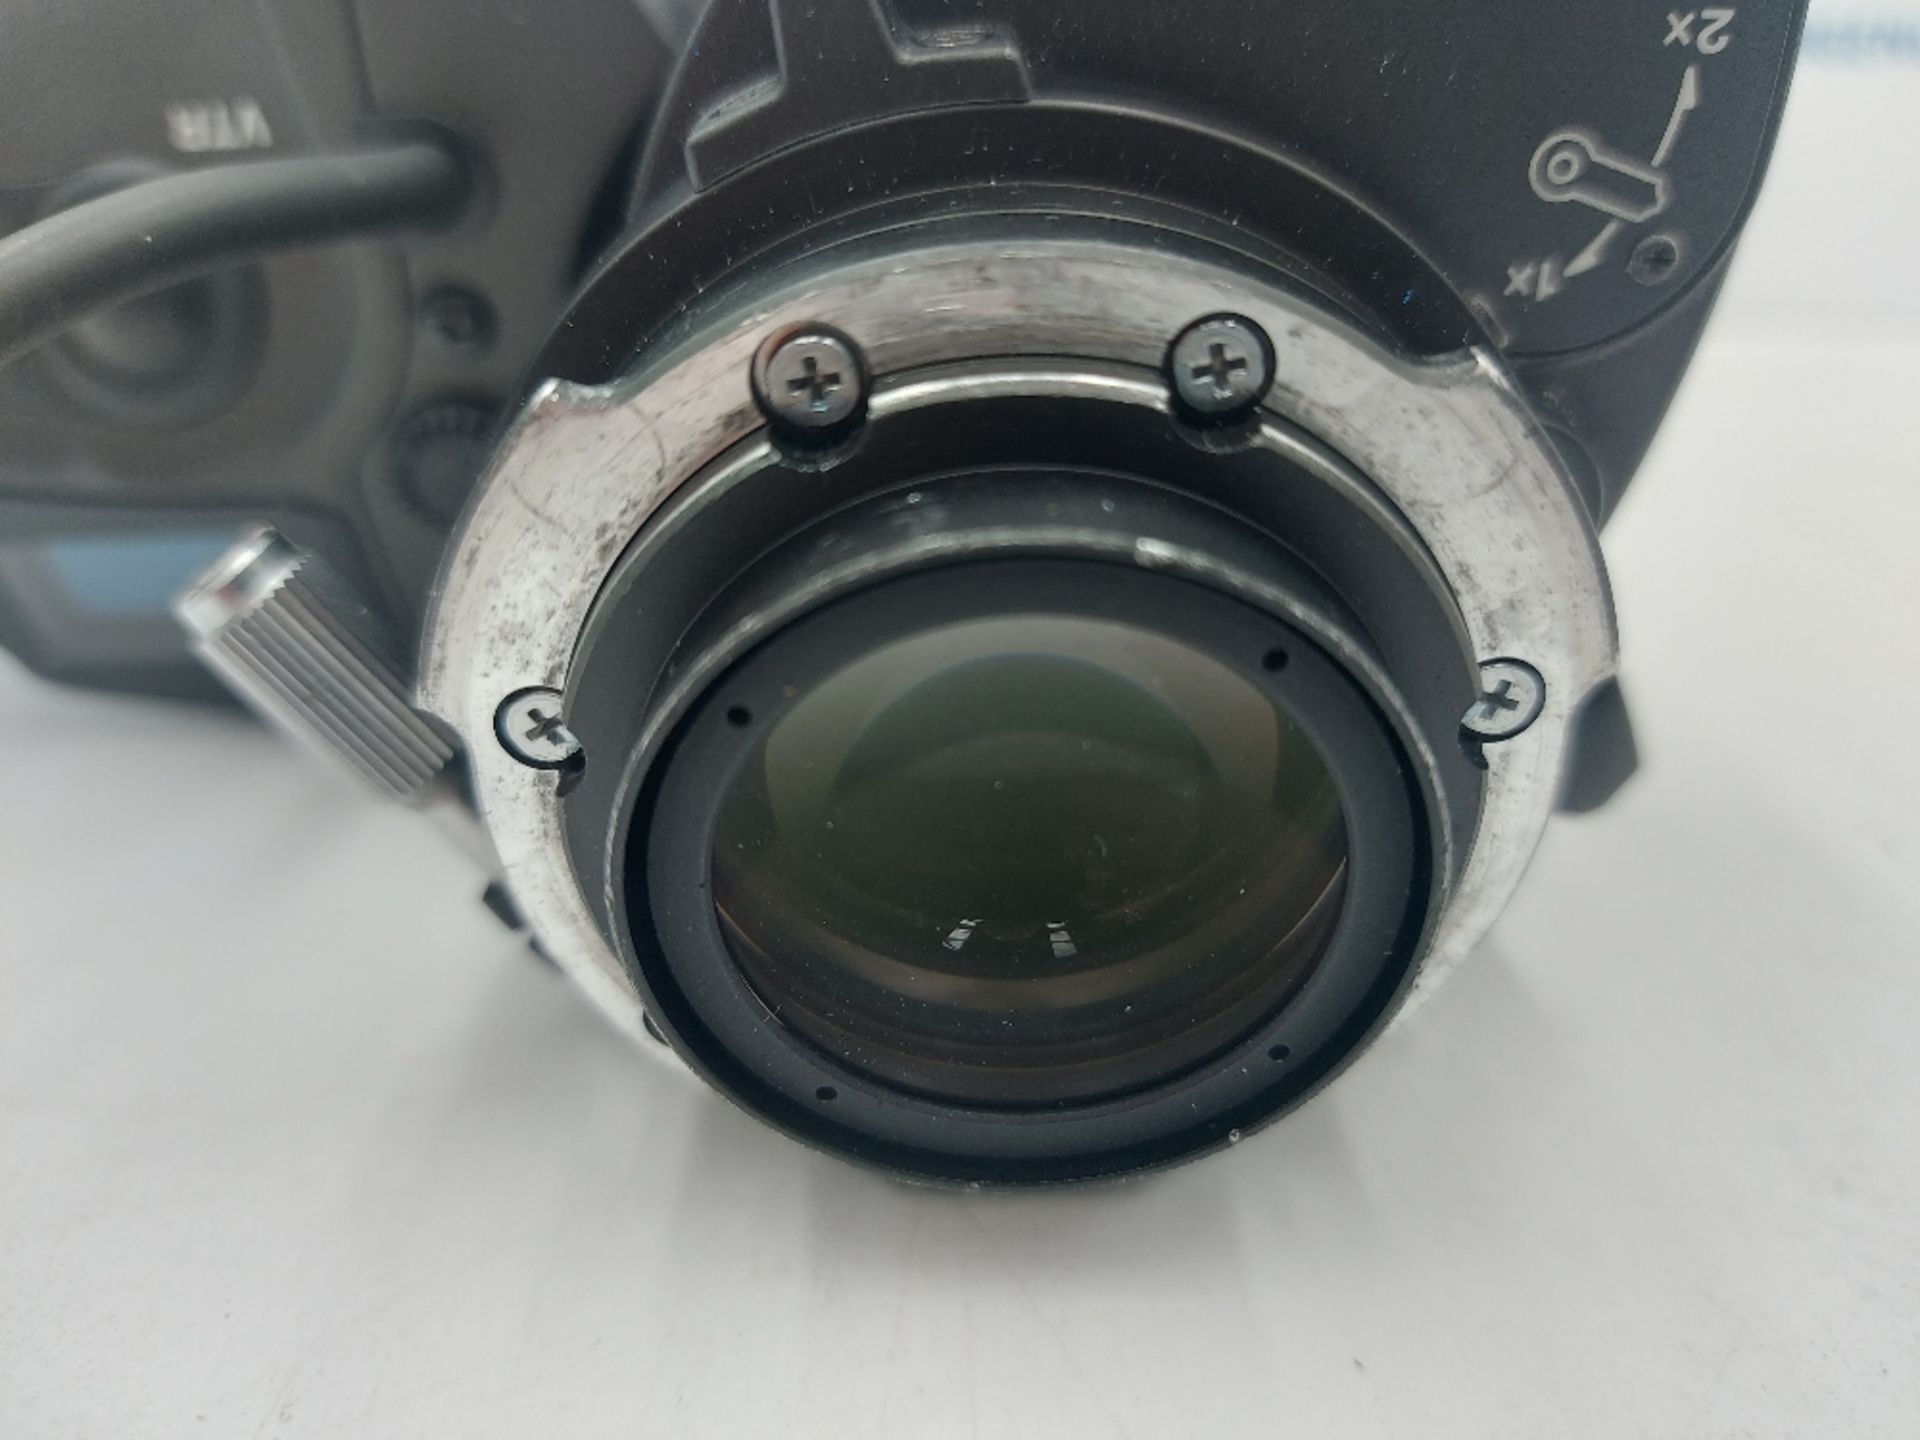 Canon HJ22x7.6 IASE HDTV Zoom Lens Kit - Image 4 of 8